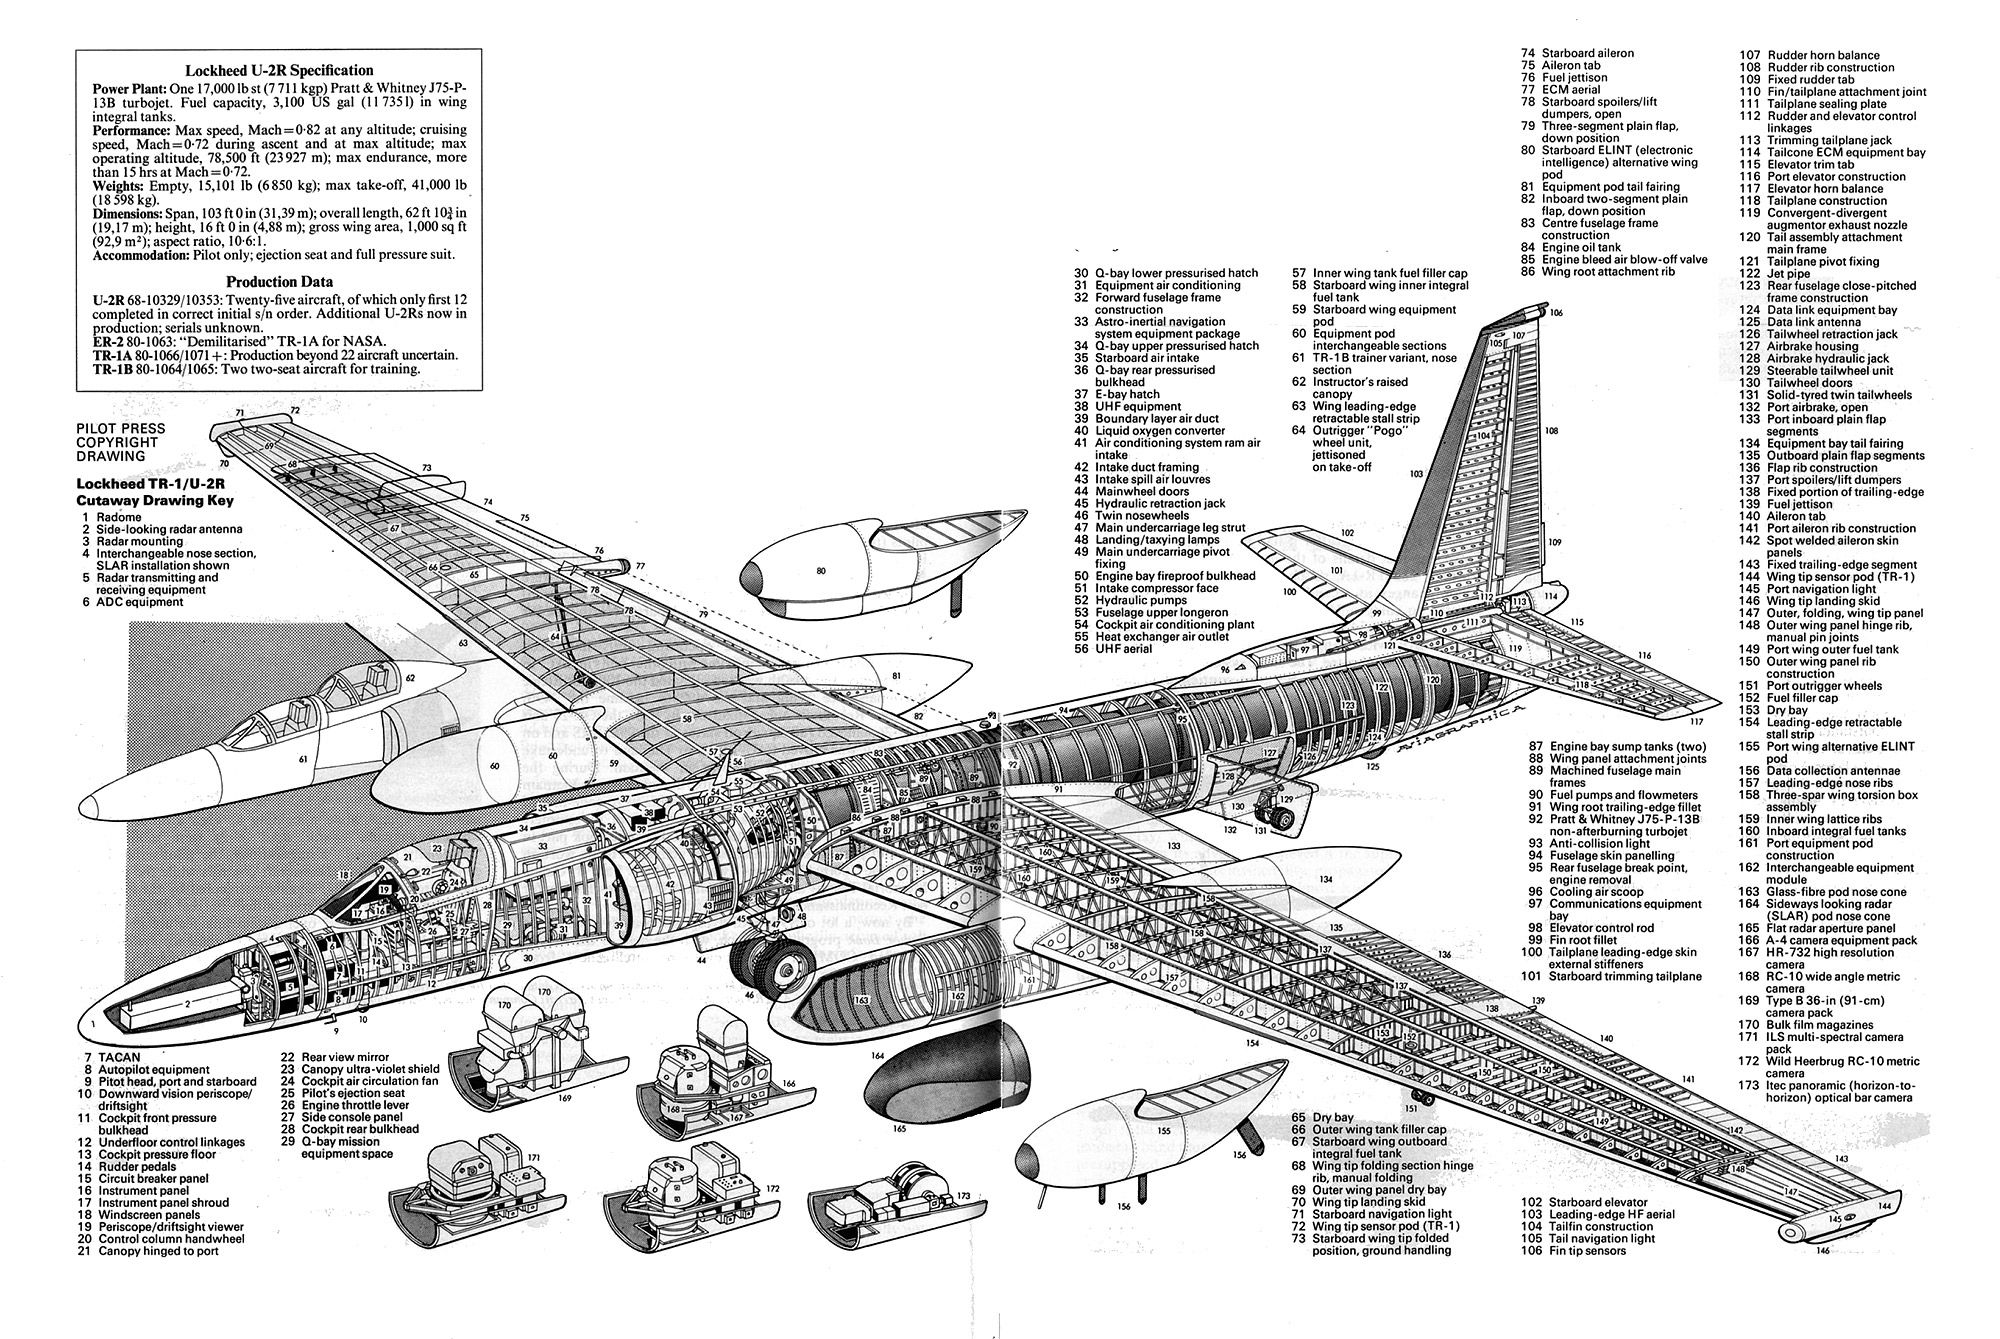 1706472422 280 Lockheed Martin U 2S Dragon Lady Update